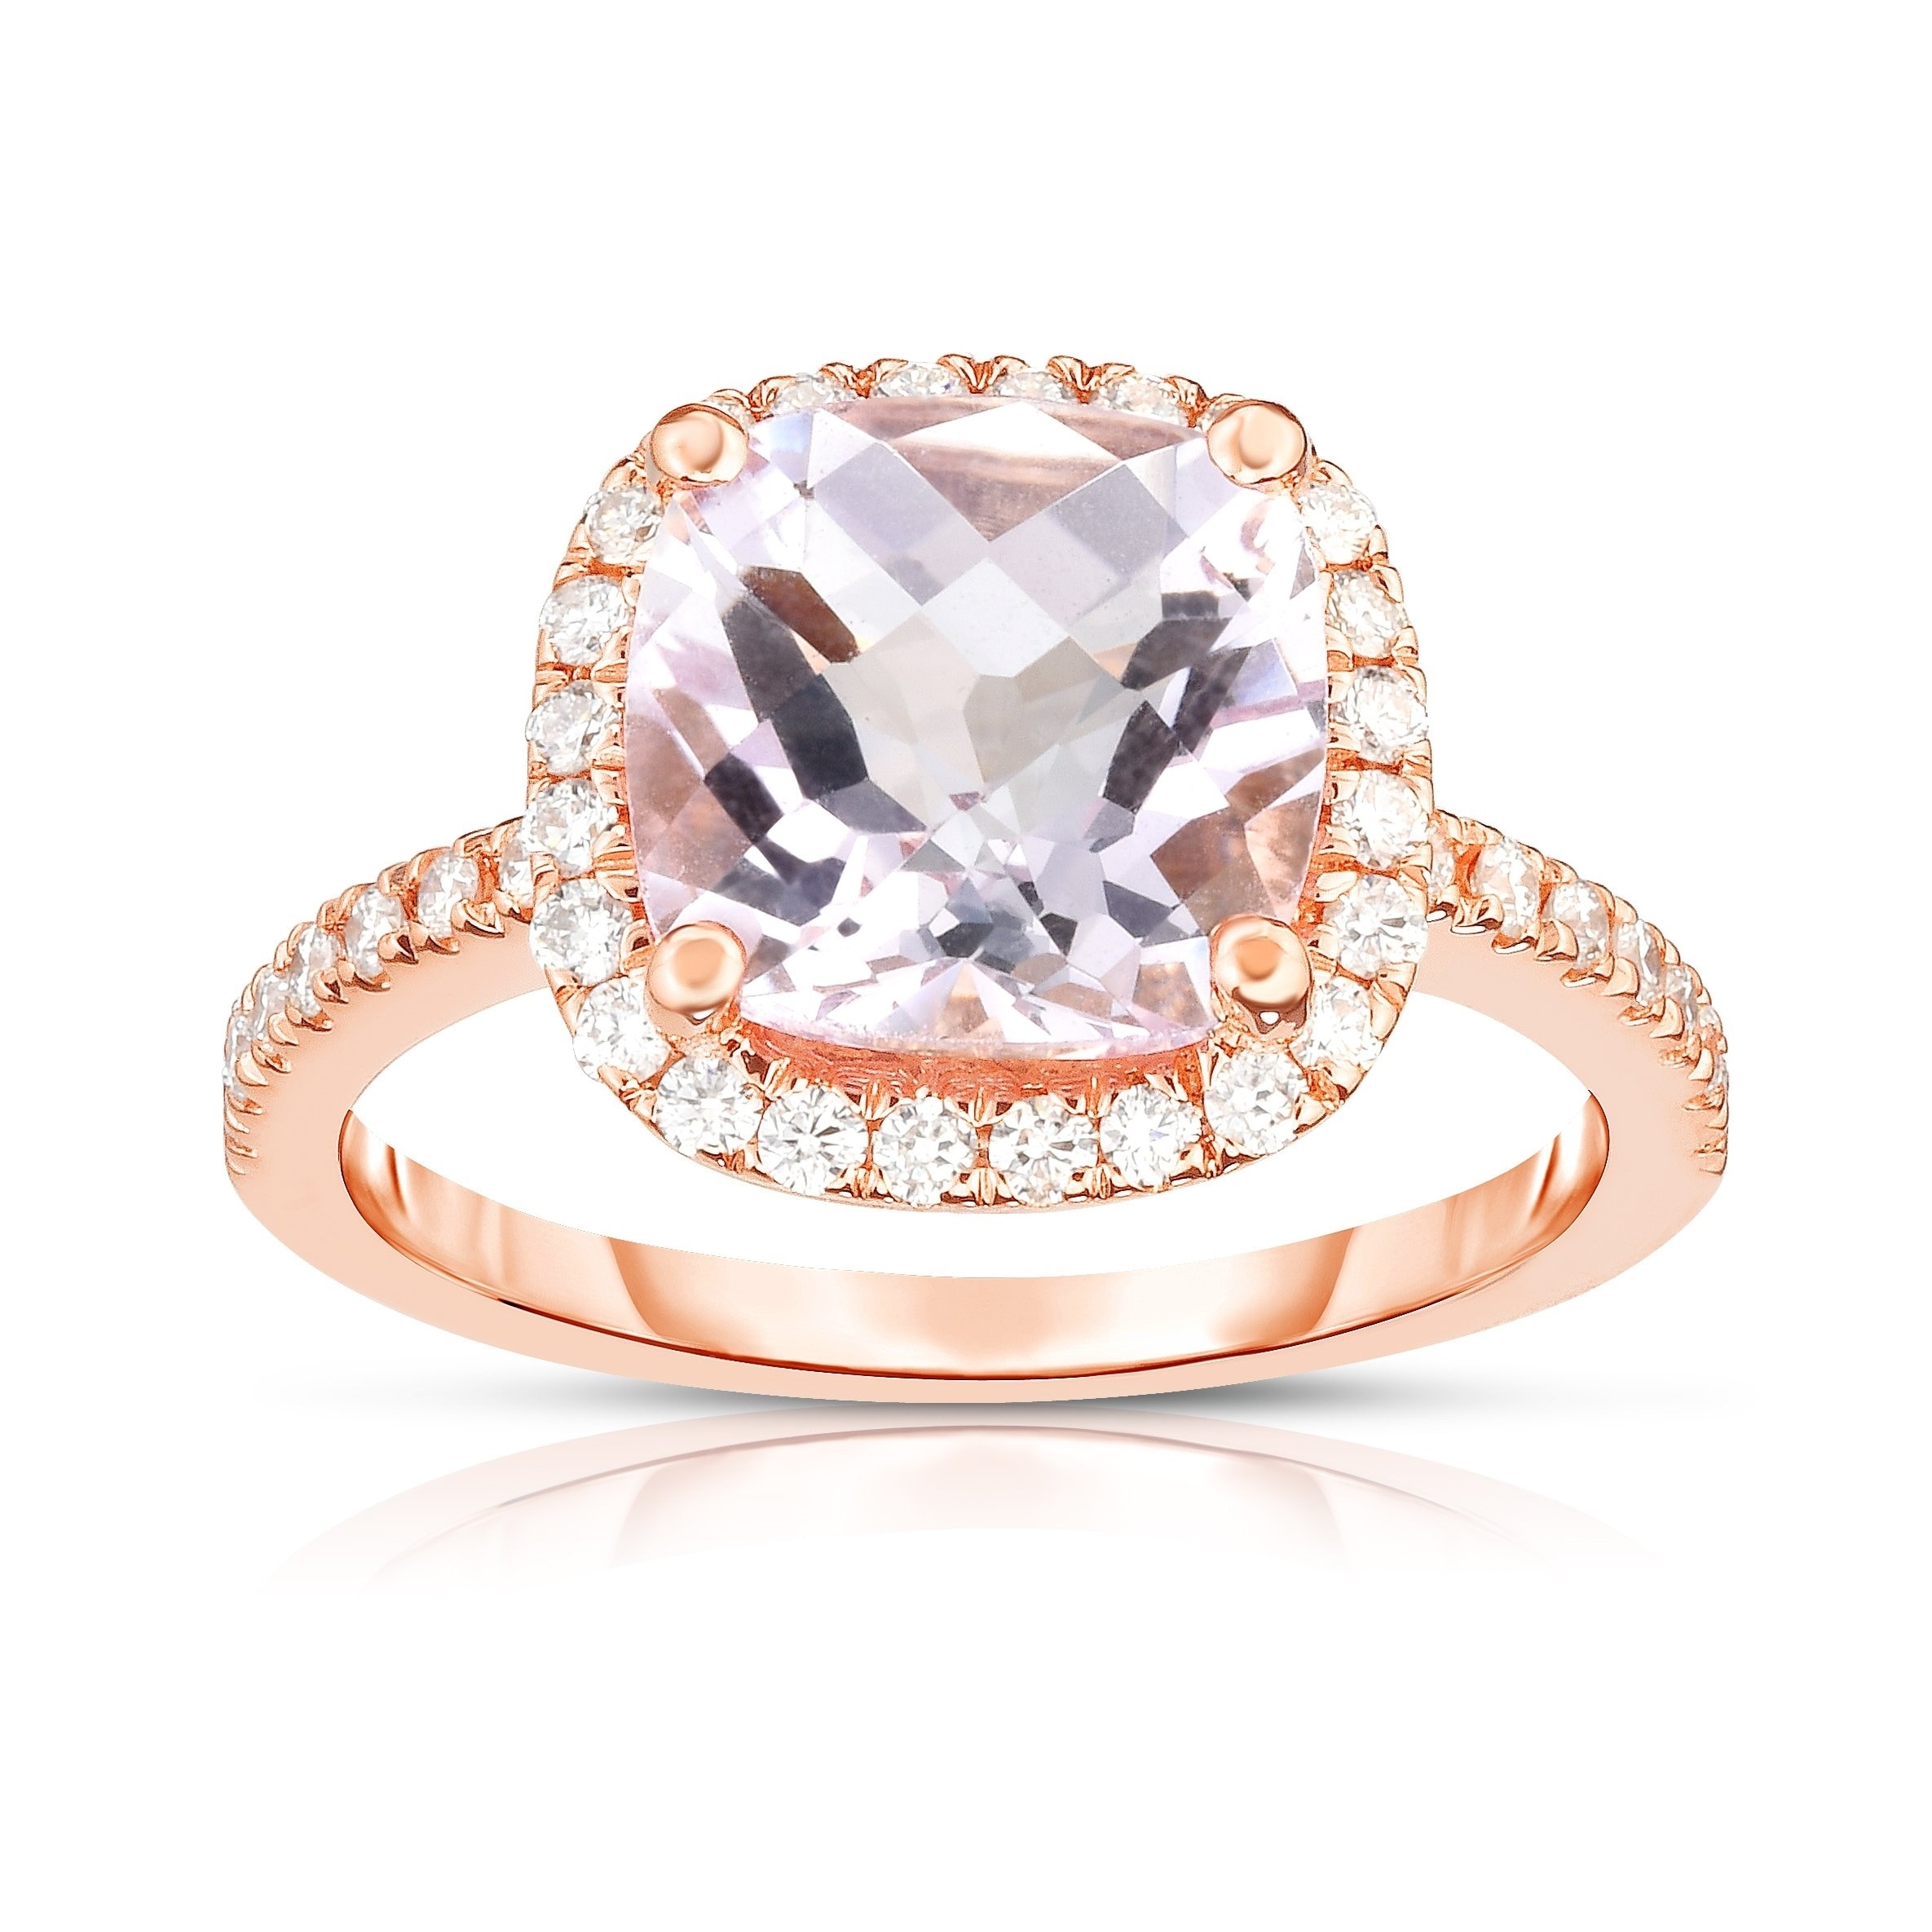 Amethyst Engagement Ring Rose Gold - The Best Original Gemstone